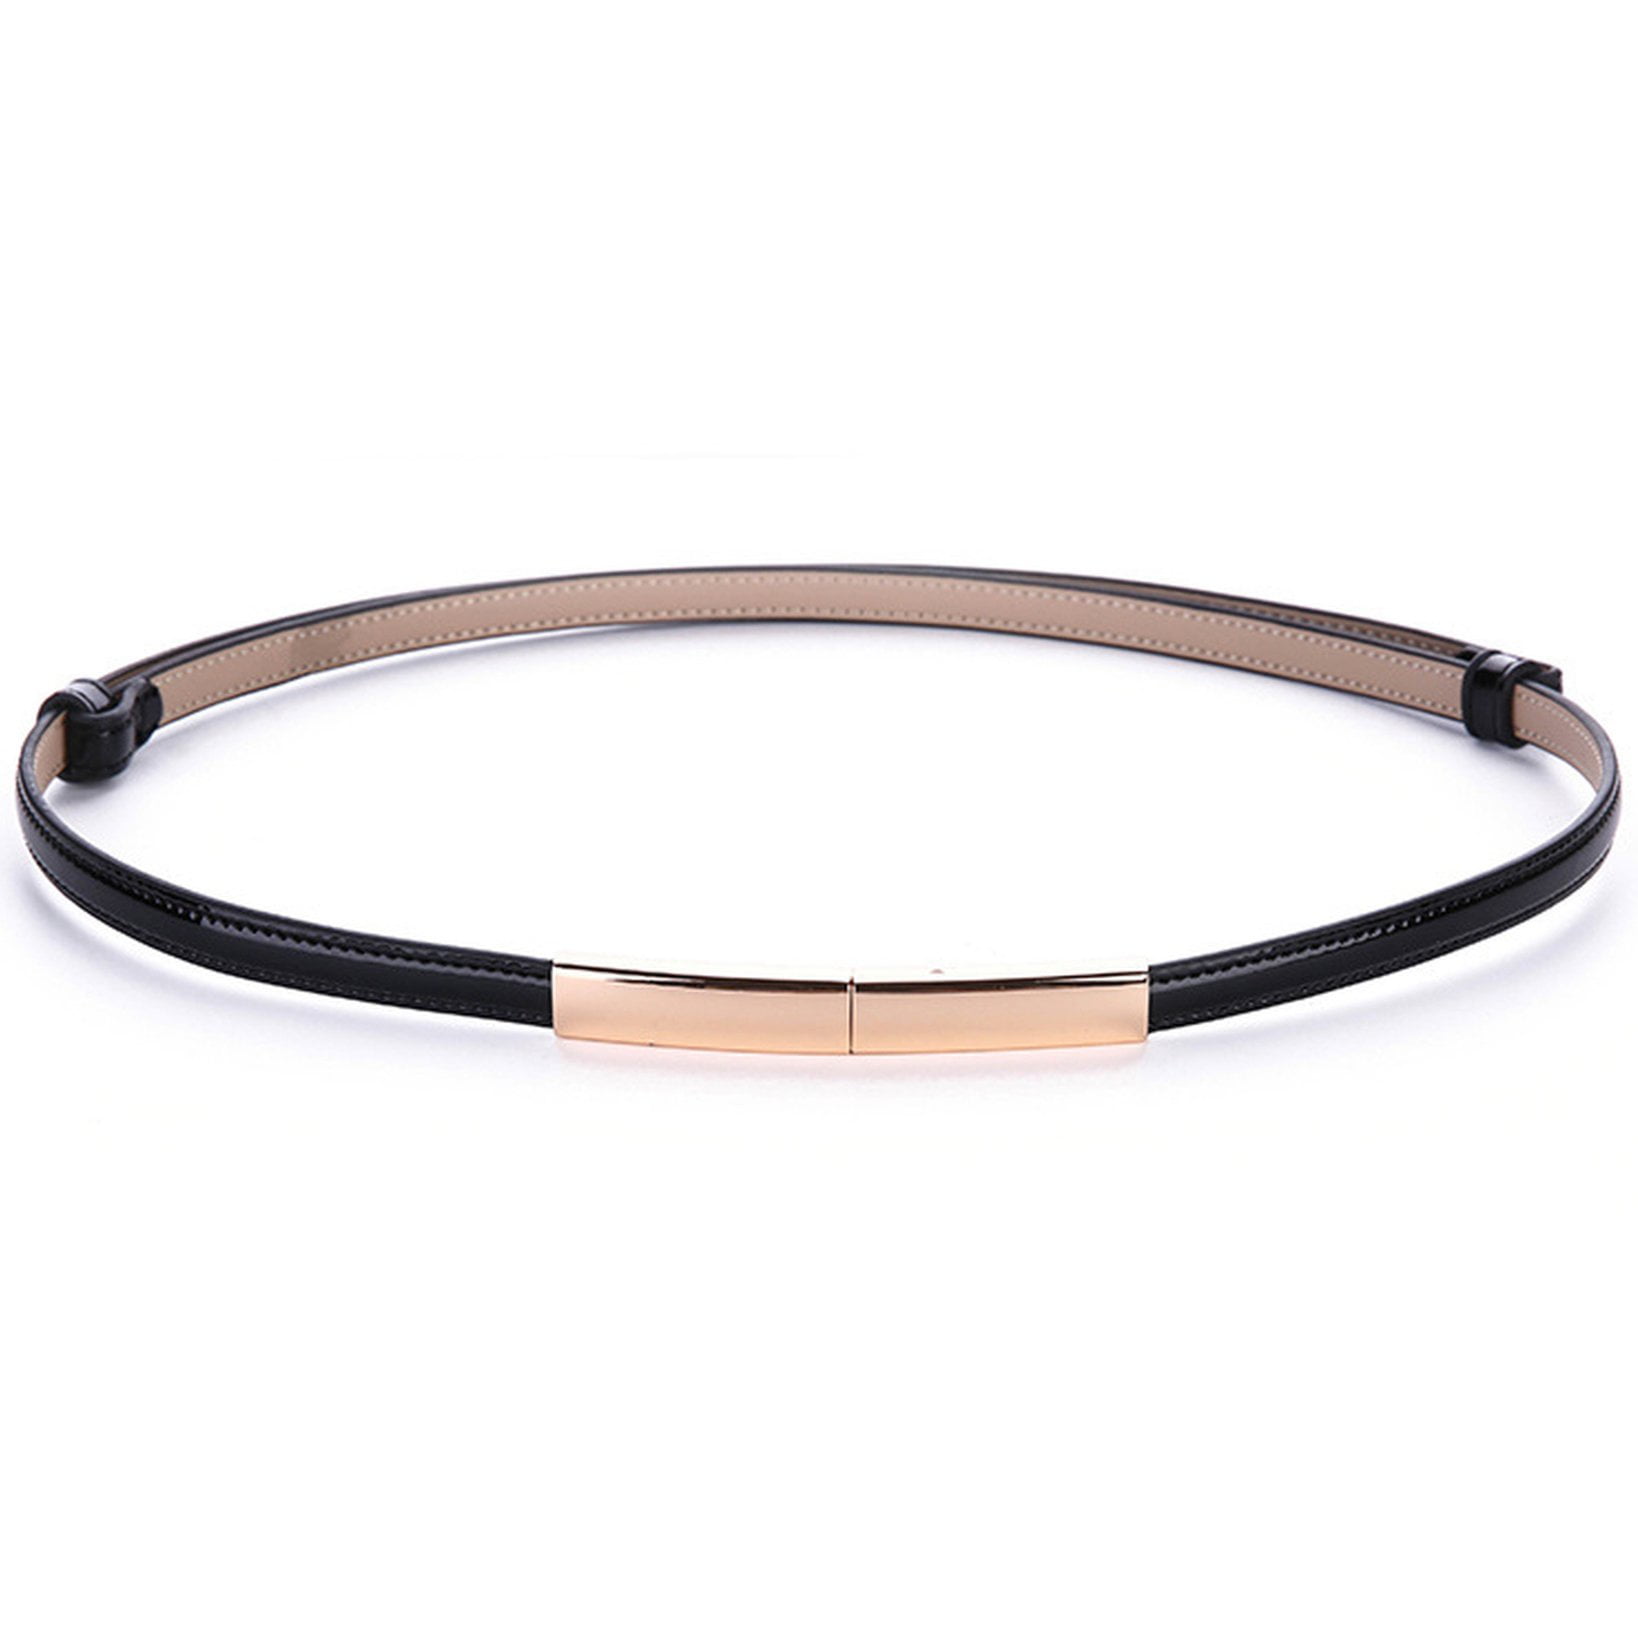 Women's Patent Leather Metal Buckle Skinny Waist Belt Adjustable Length 